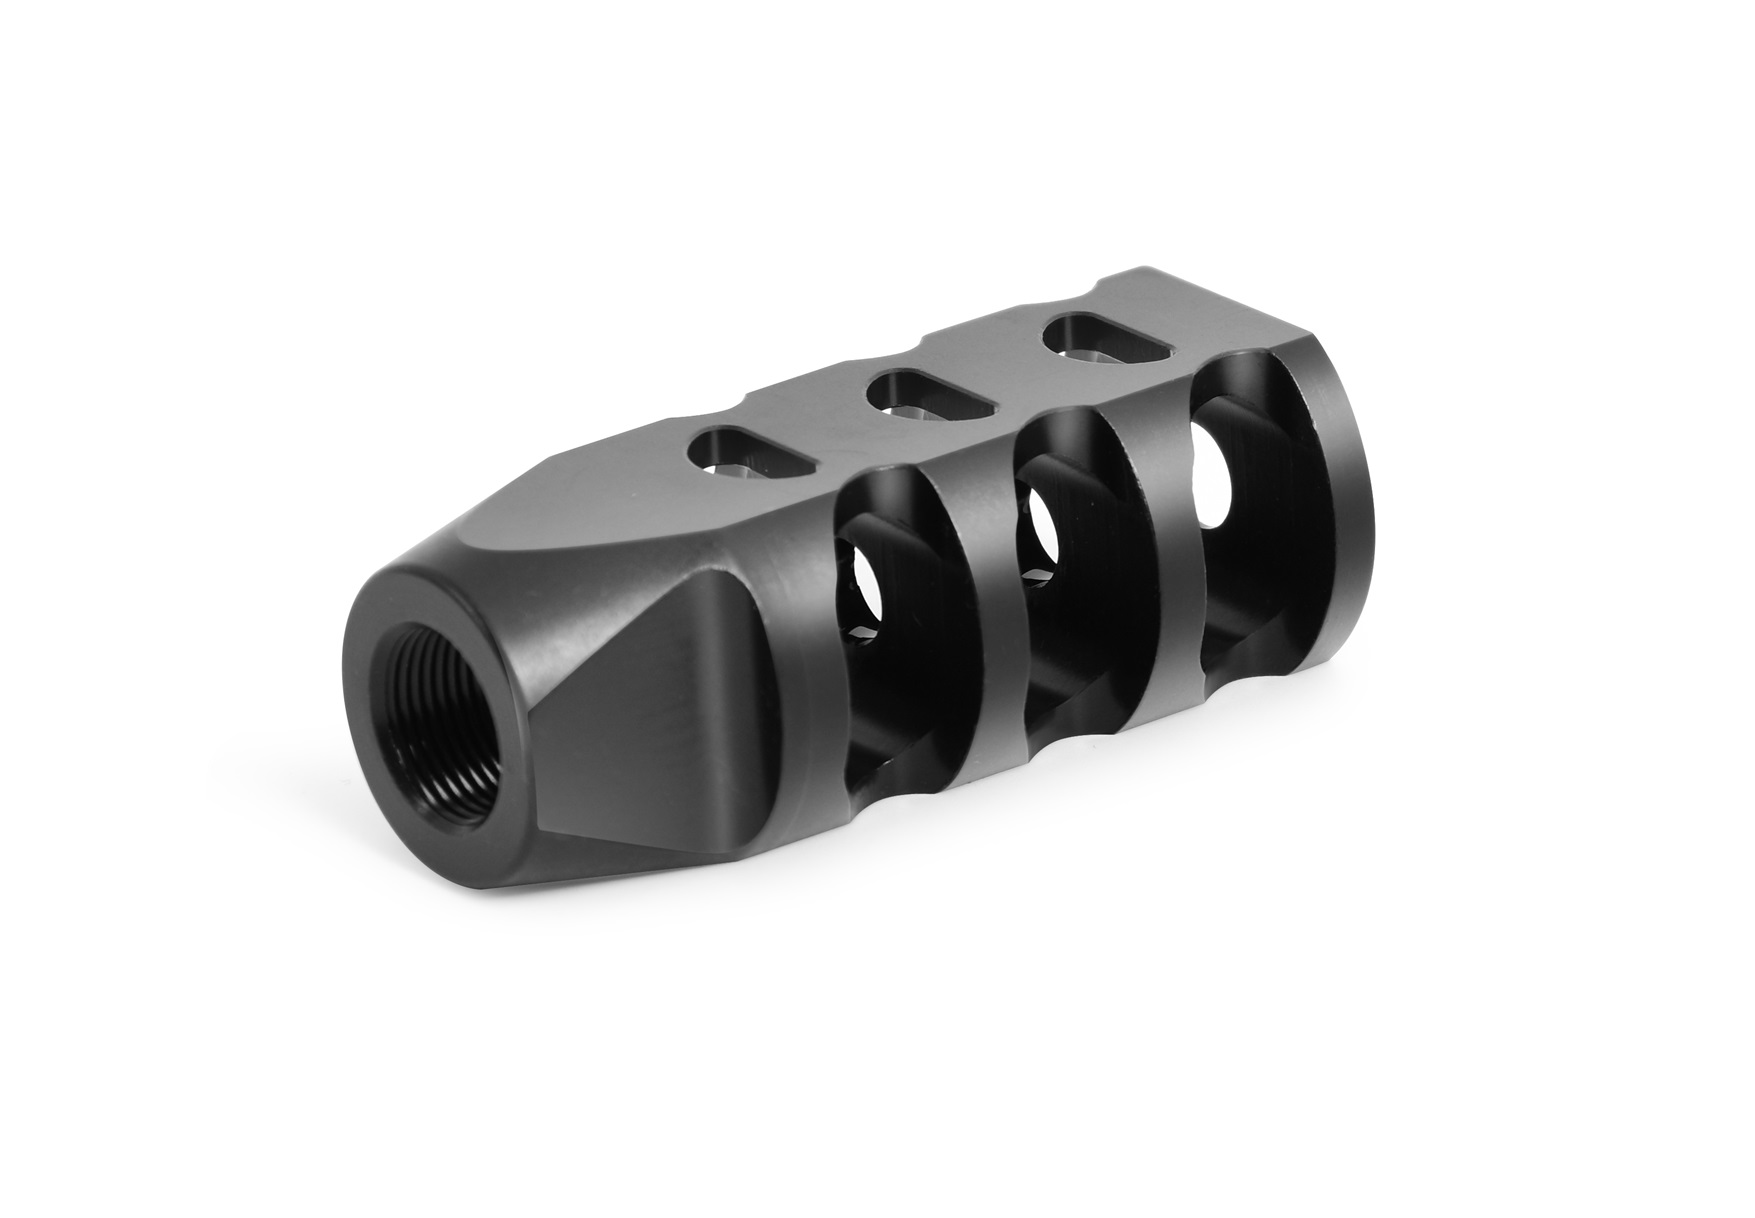 

Steel .308 7.62 5/8x24UNEF Thread Muzzle Brake, Customize